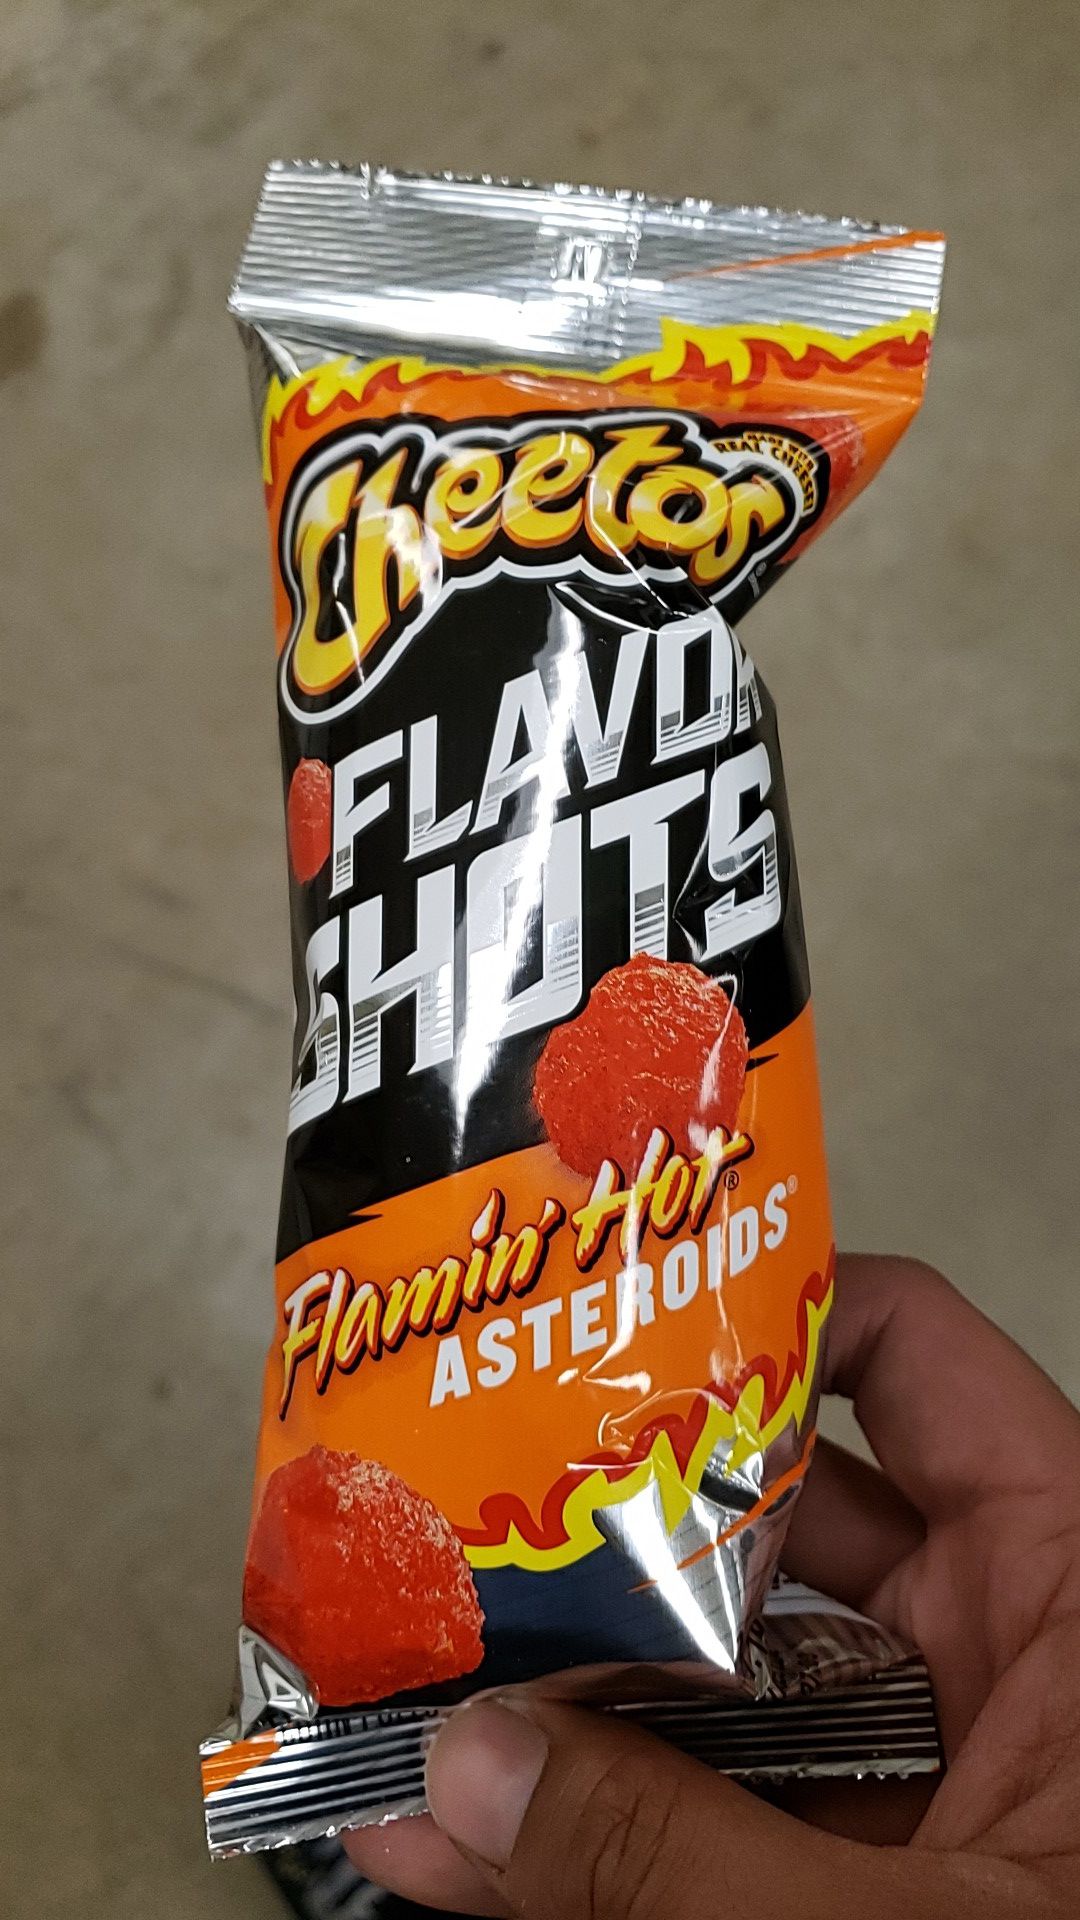 Cheetos asteroids